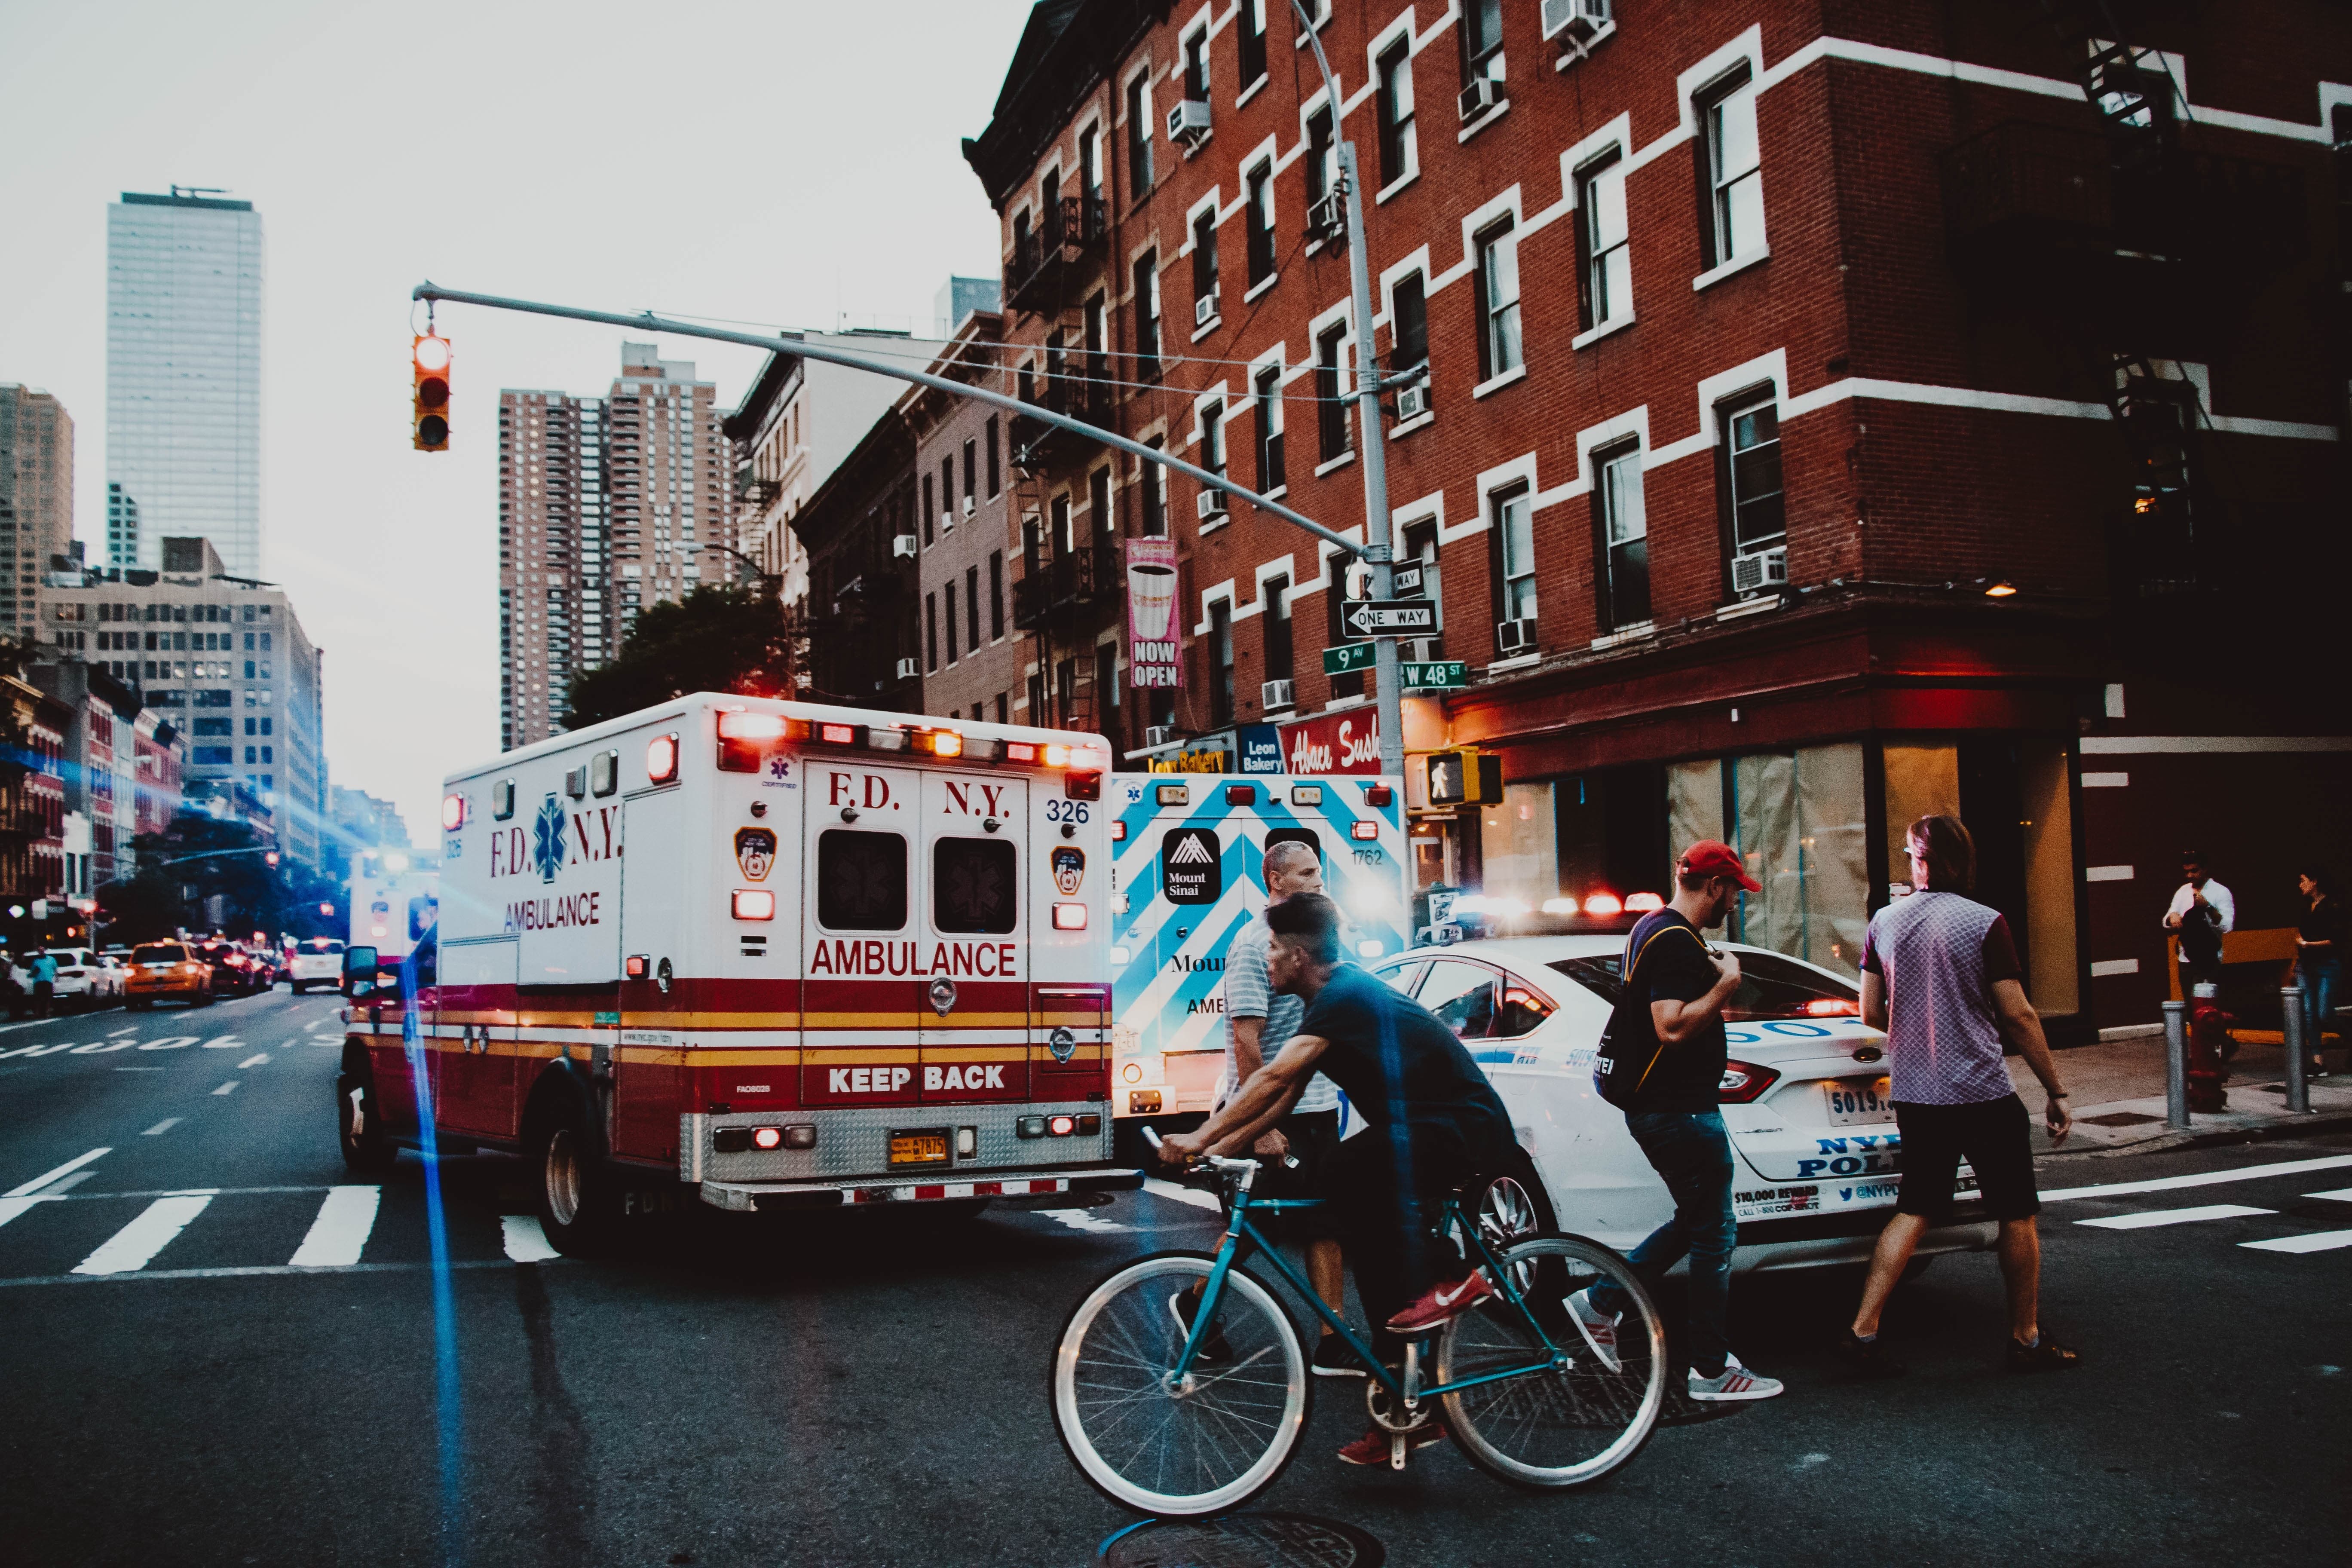 Ambulance on a crowded street corner